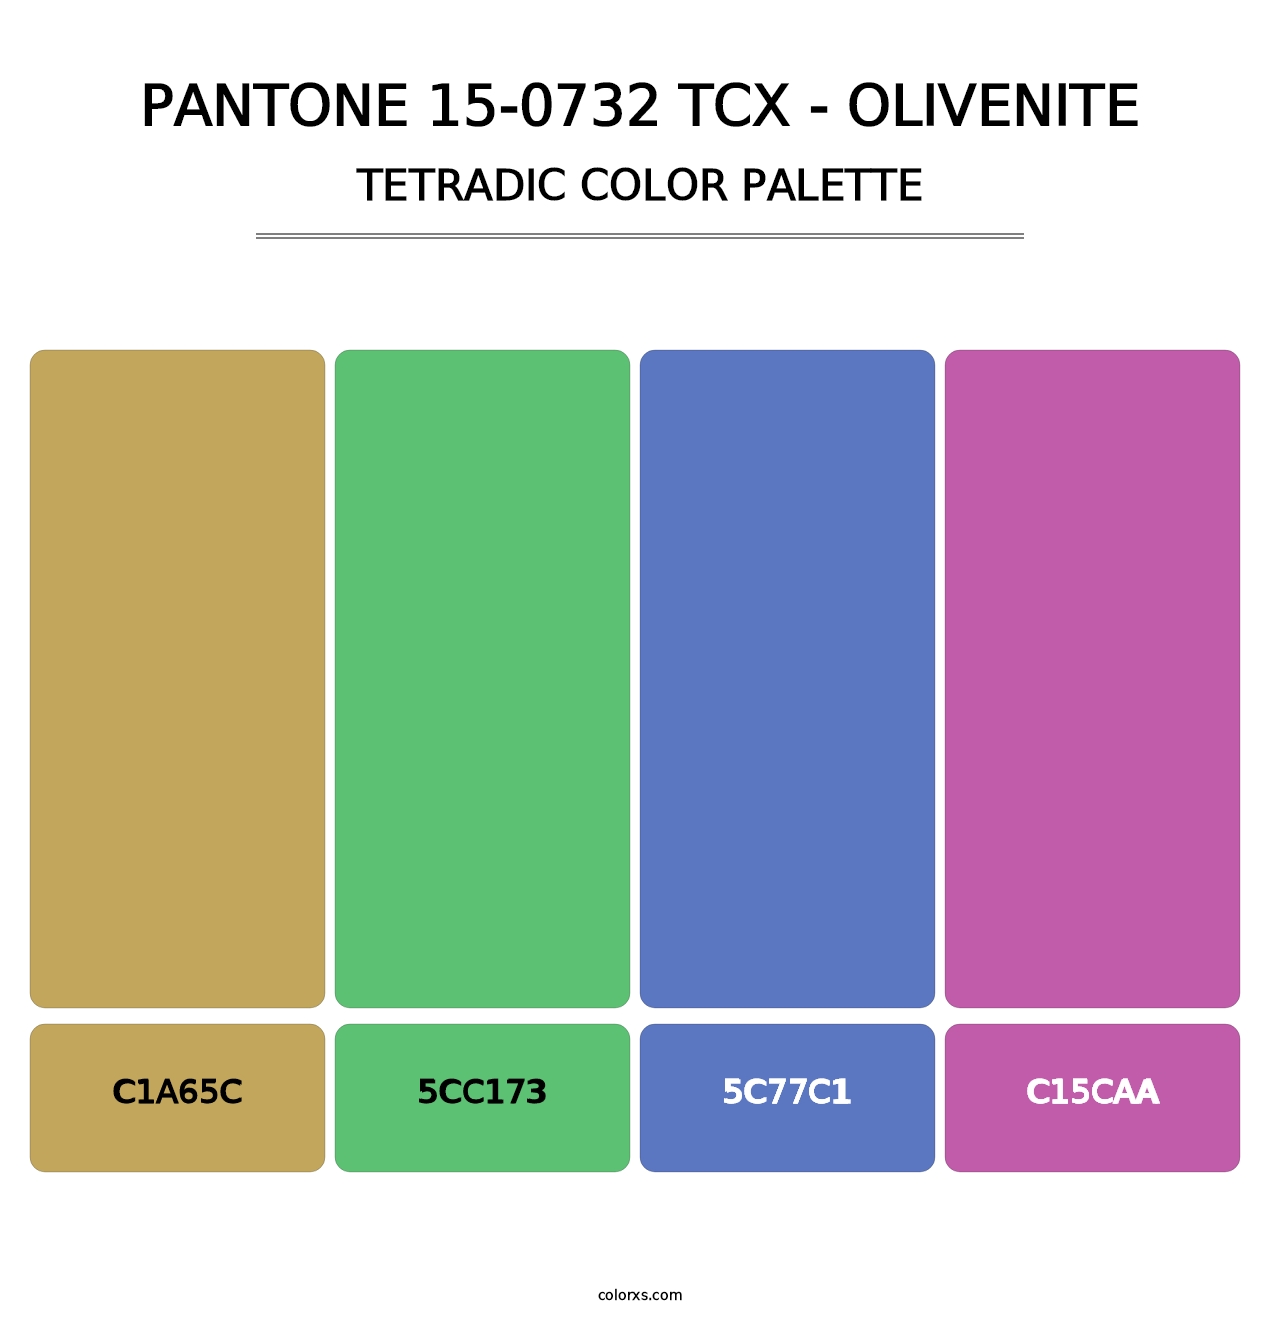 PANTONE 15-0732 TCX - Olivenite - Tetradic Color Palette